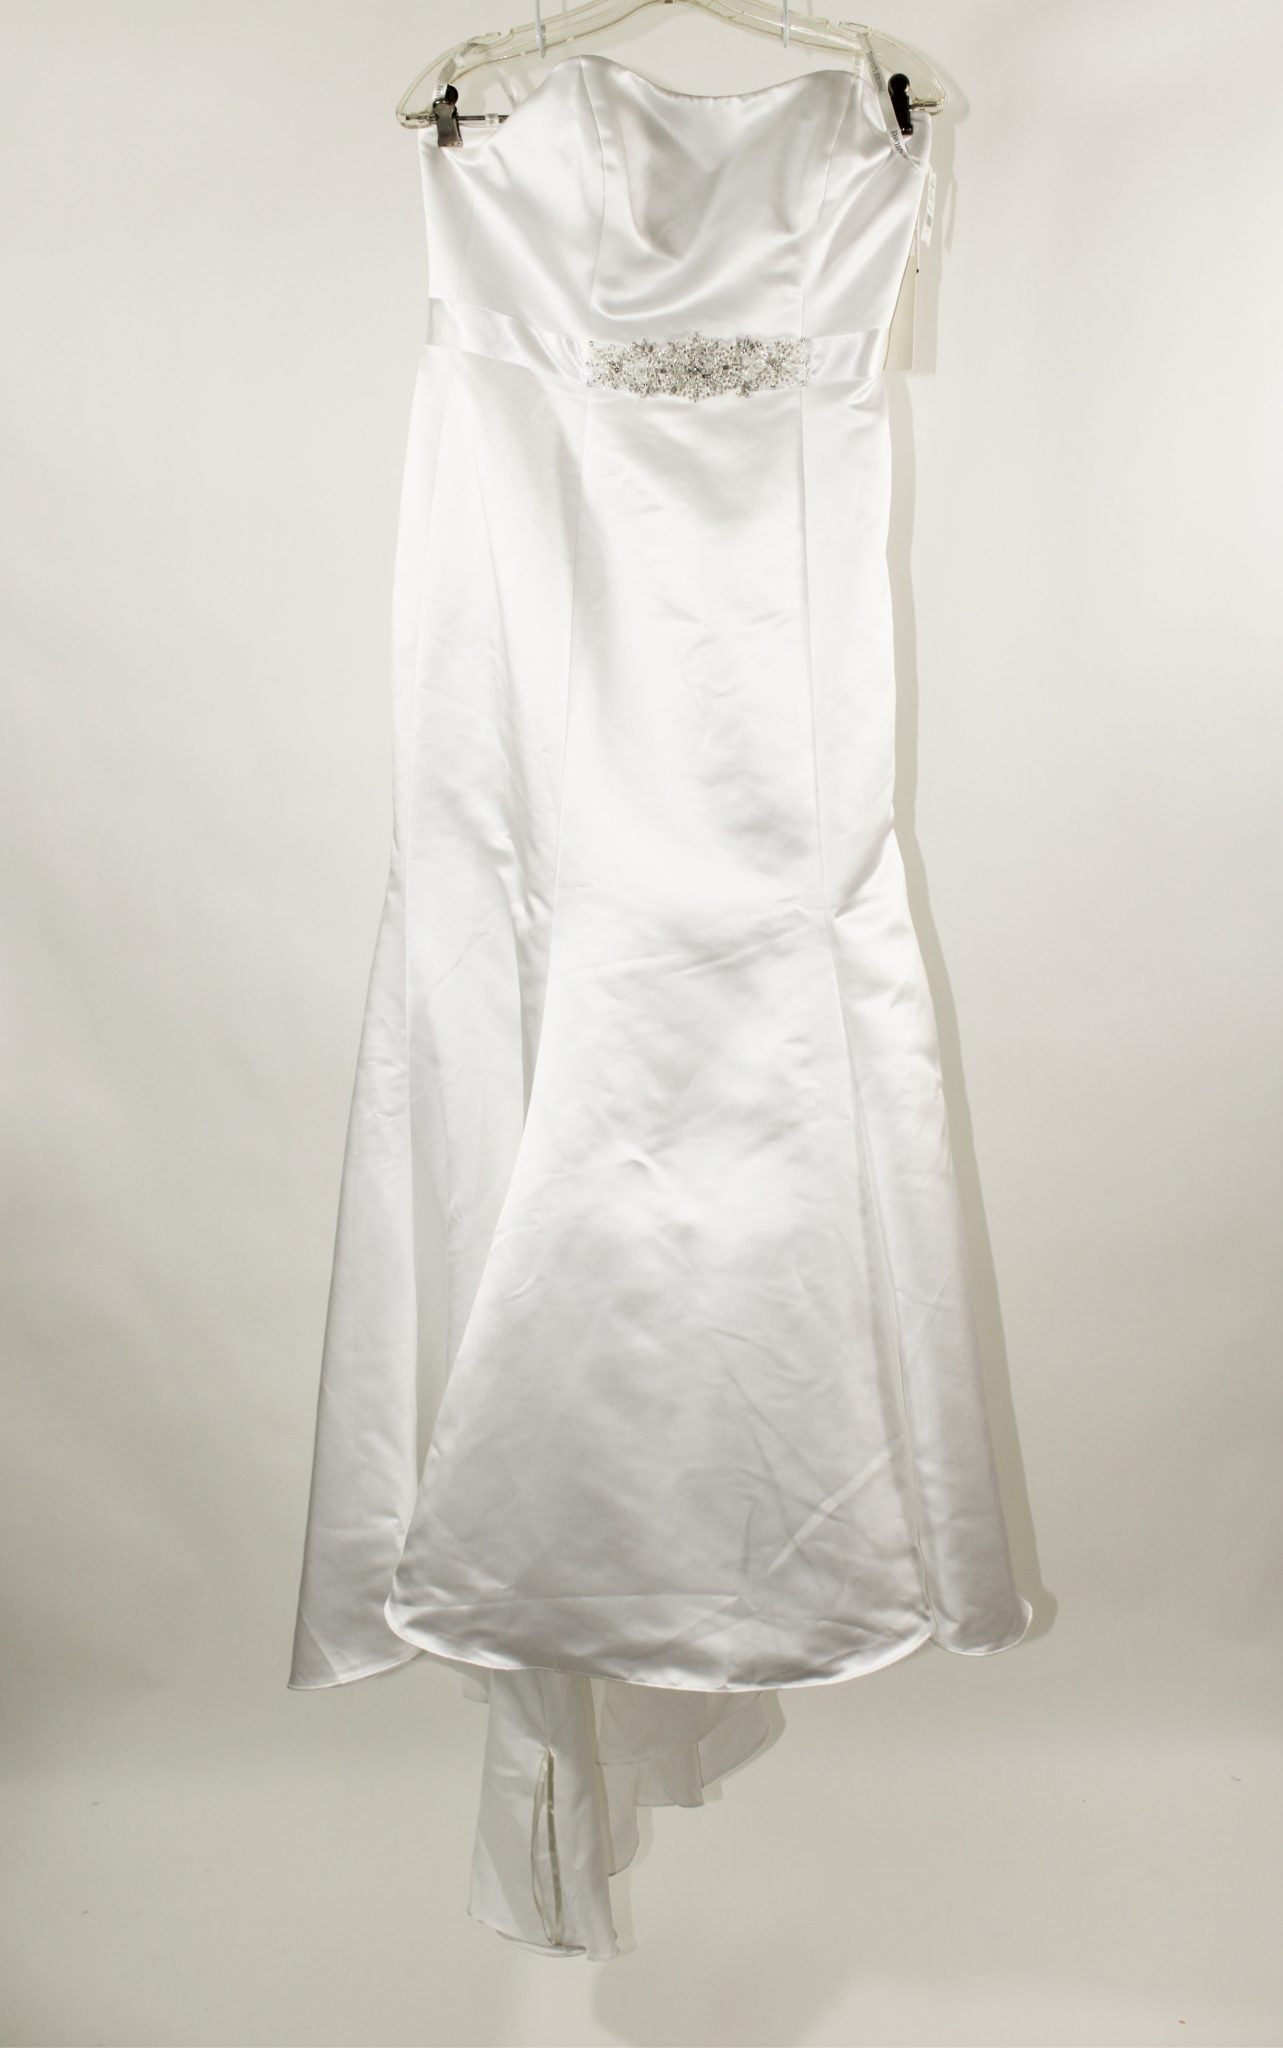 NEW David's Bridal Wedding Gown | Size 10 Petite